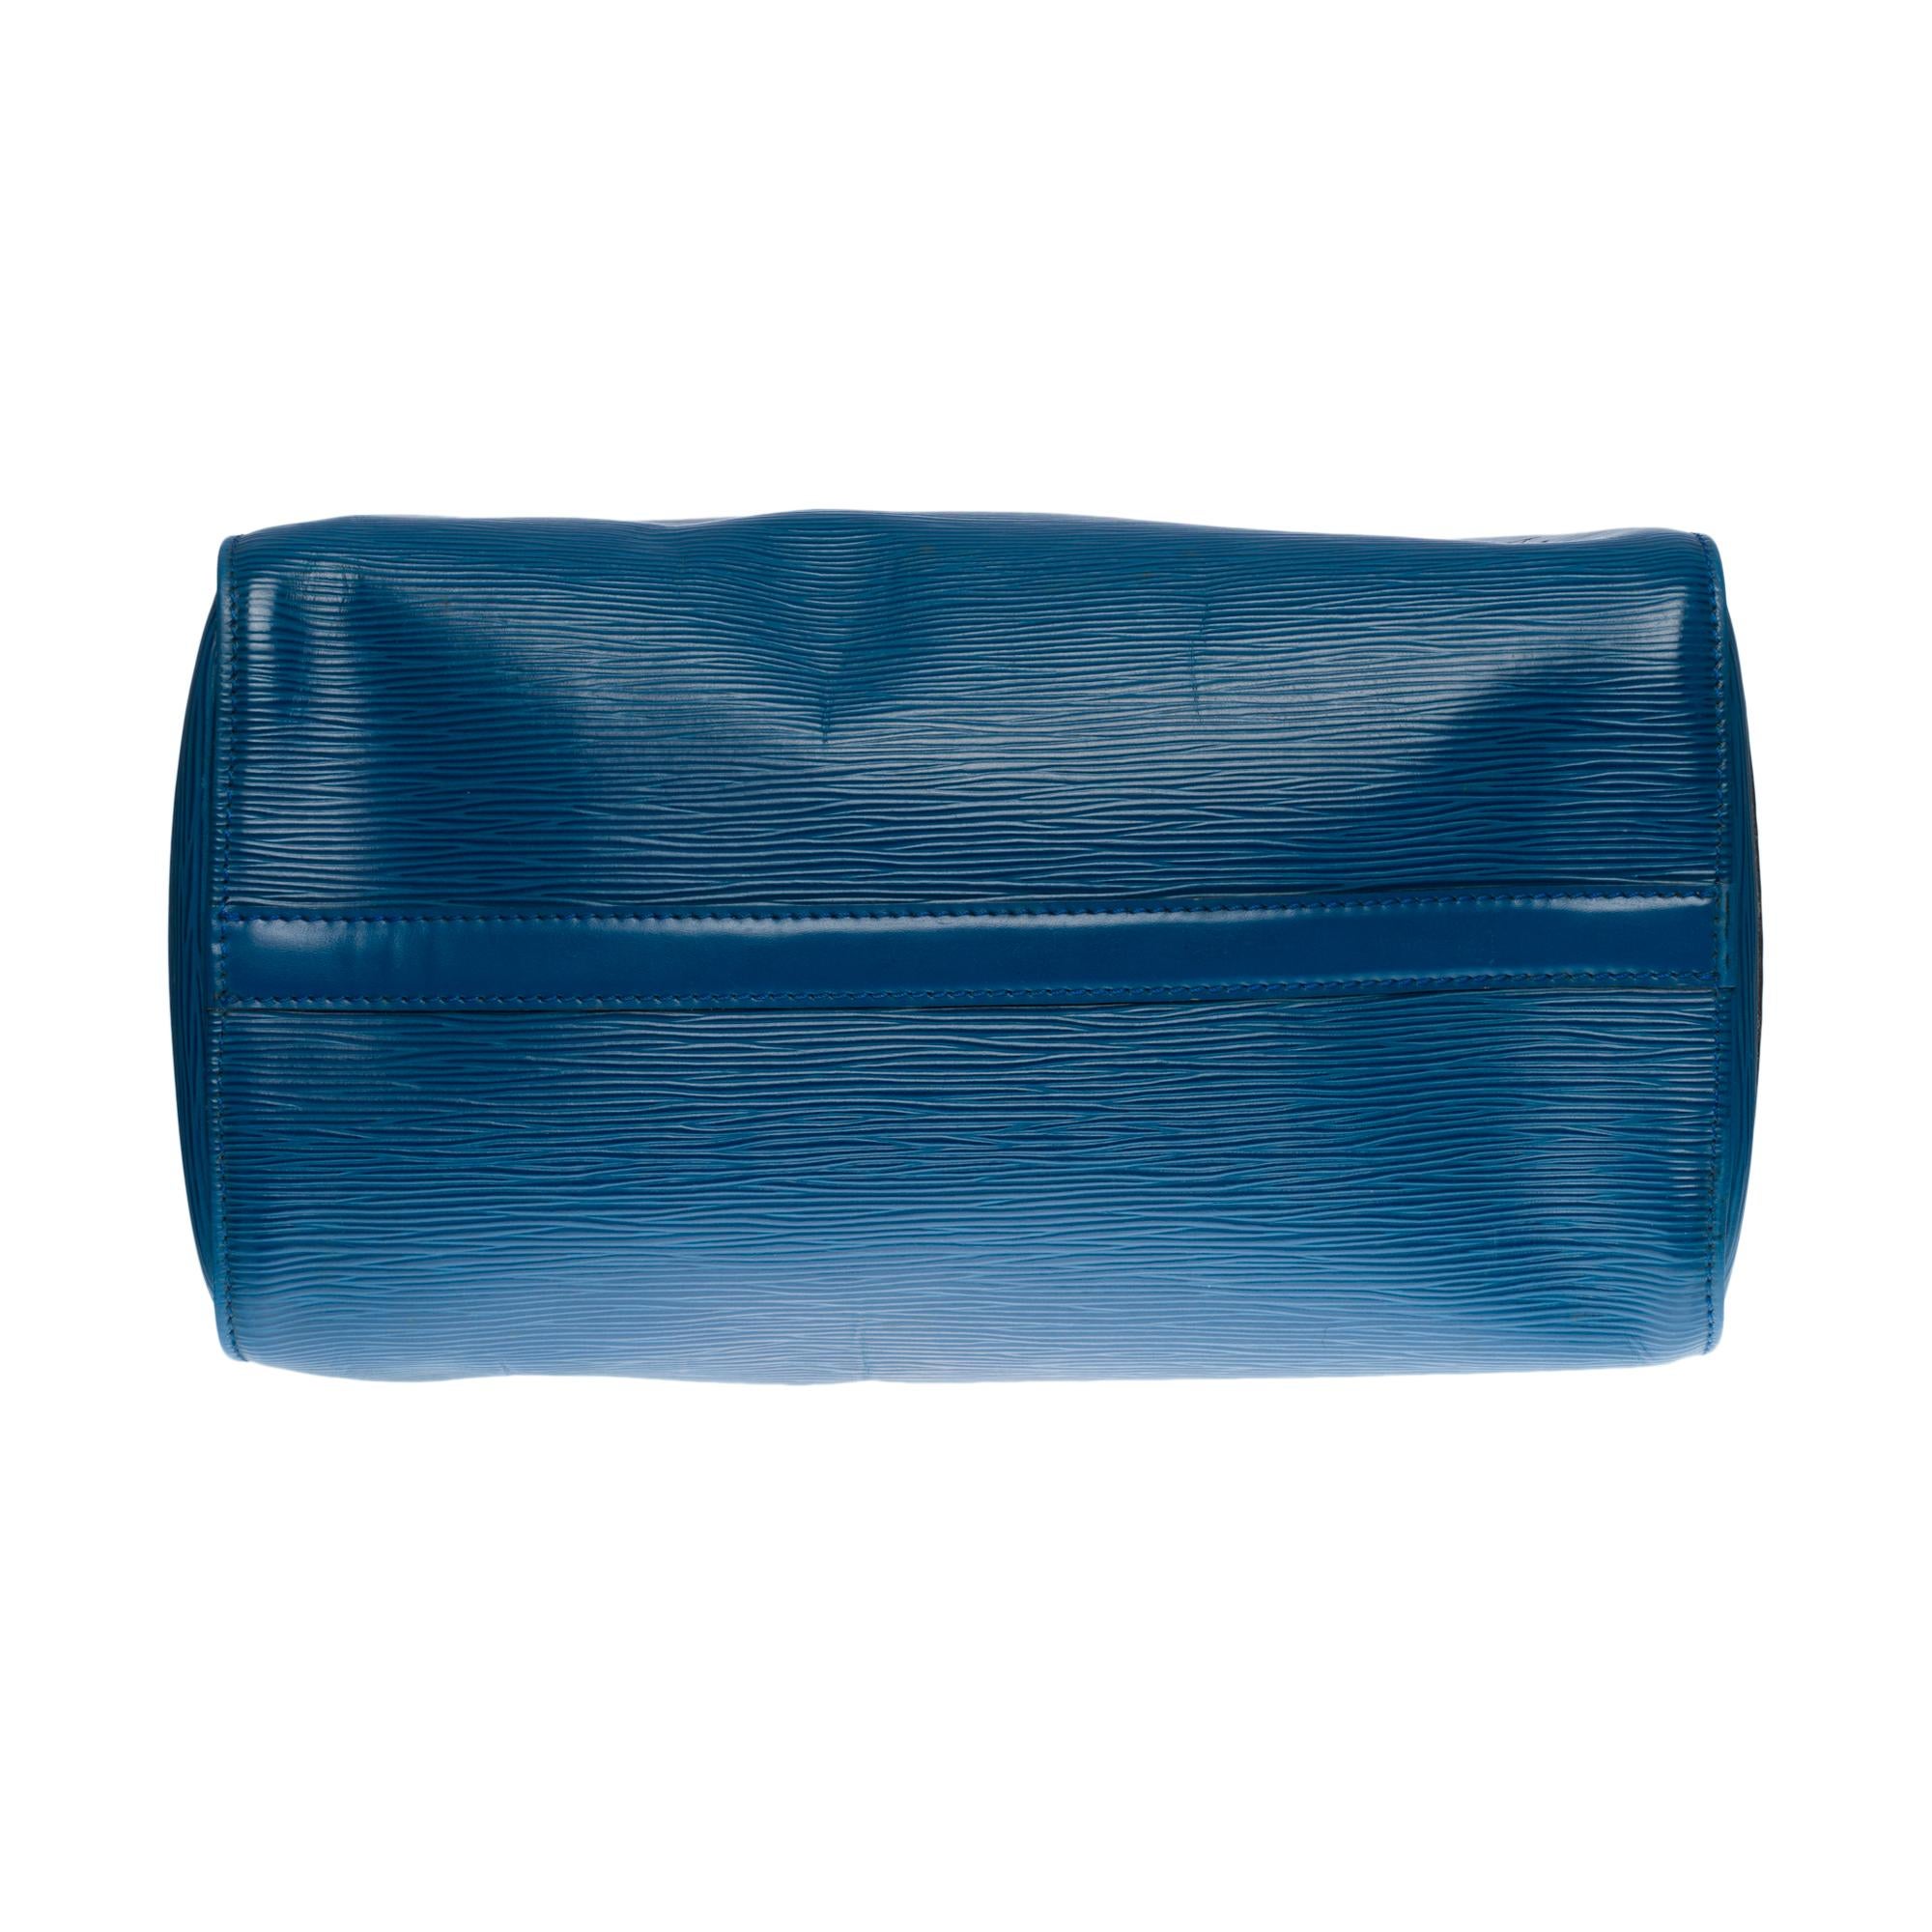 Louis Vuitton Speedy 30 handbag in blue cobalt épi leather and gold hardware 1